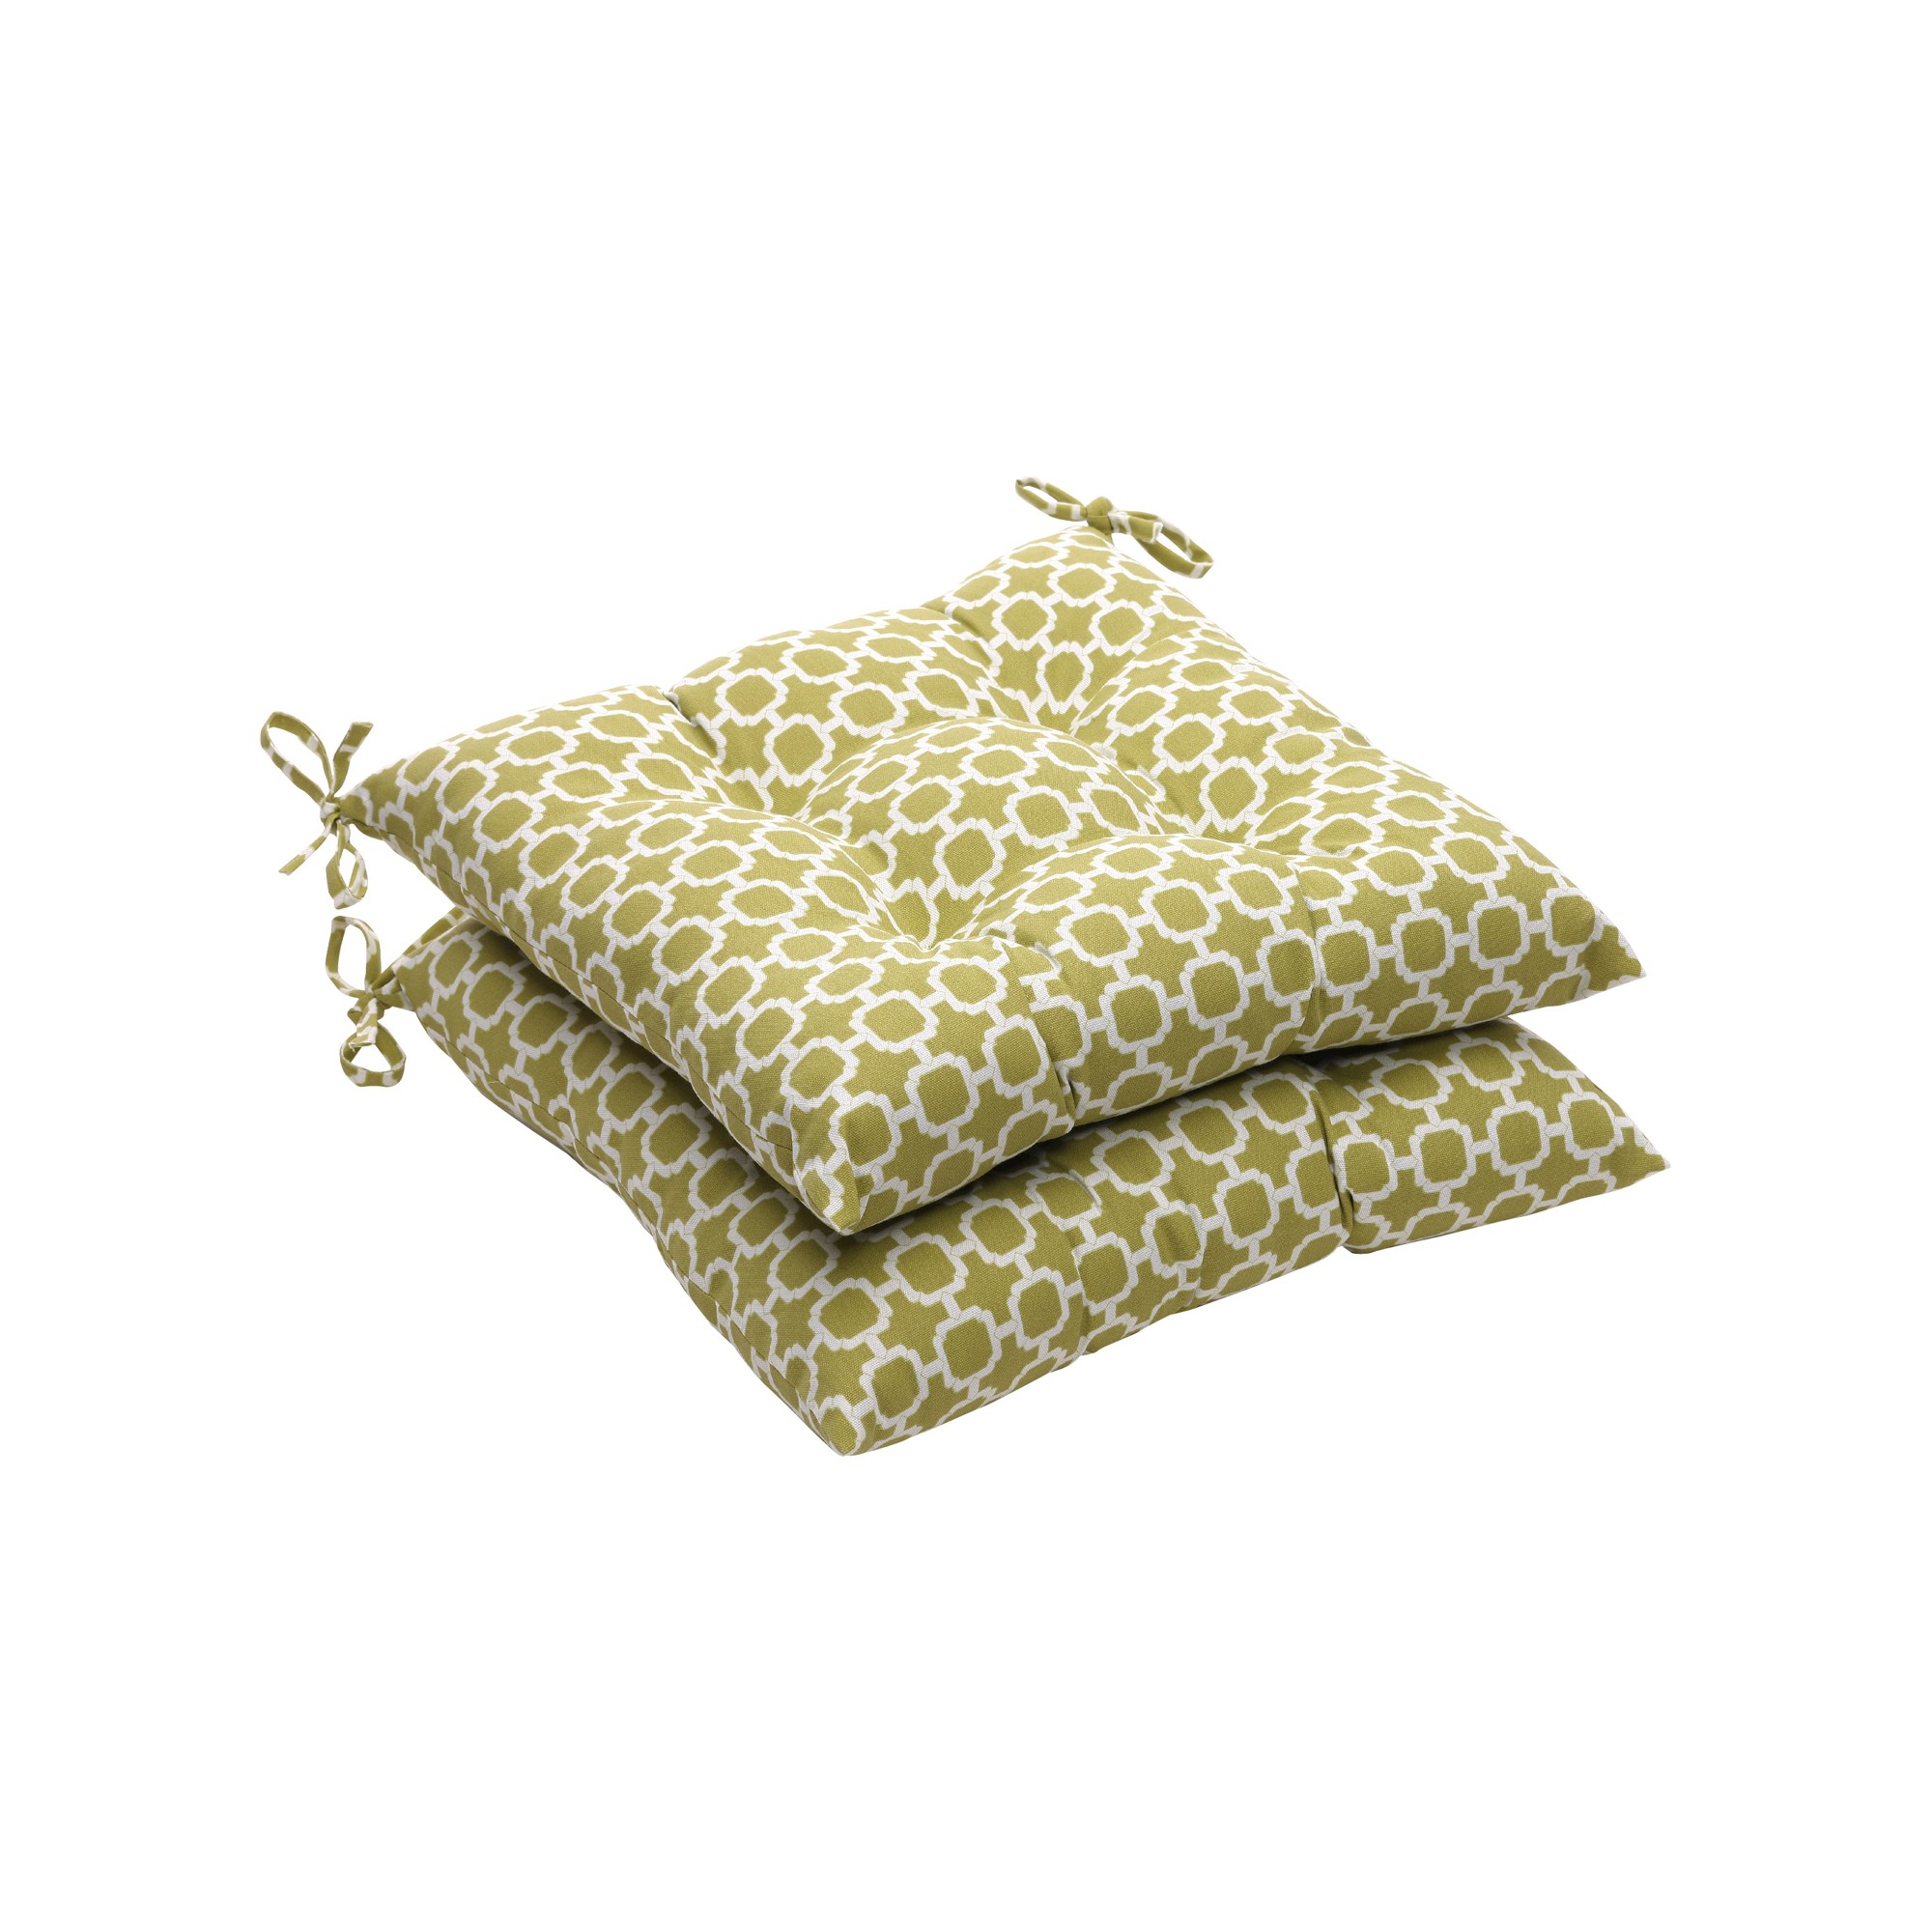 Outdoor 2-Piece Tufted Chair Cushion Set - Green/White Geometric